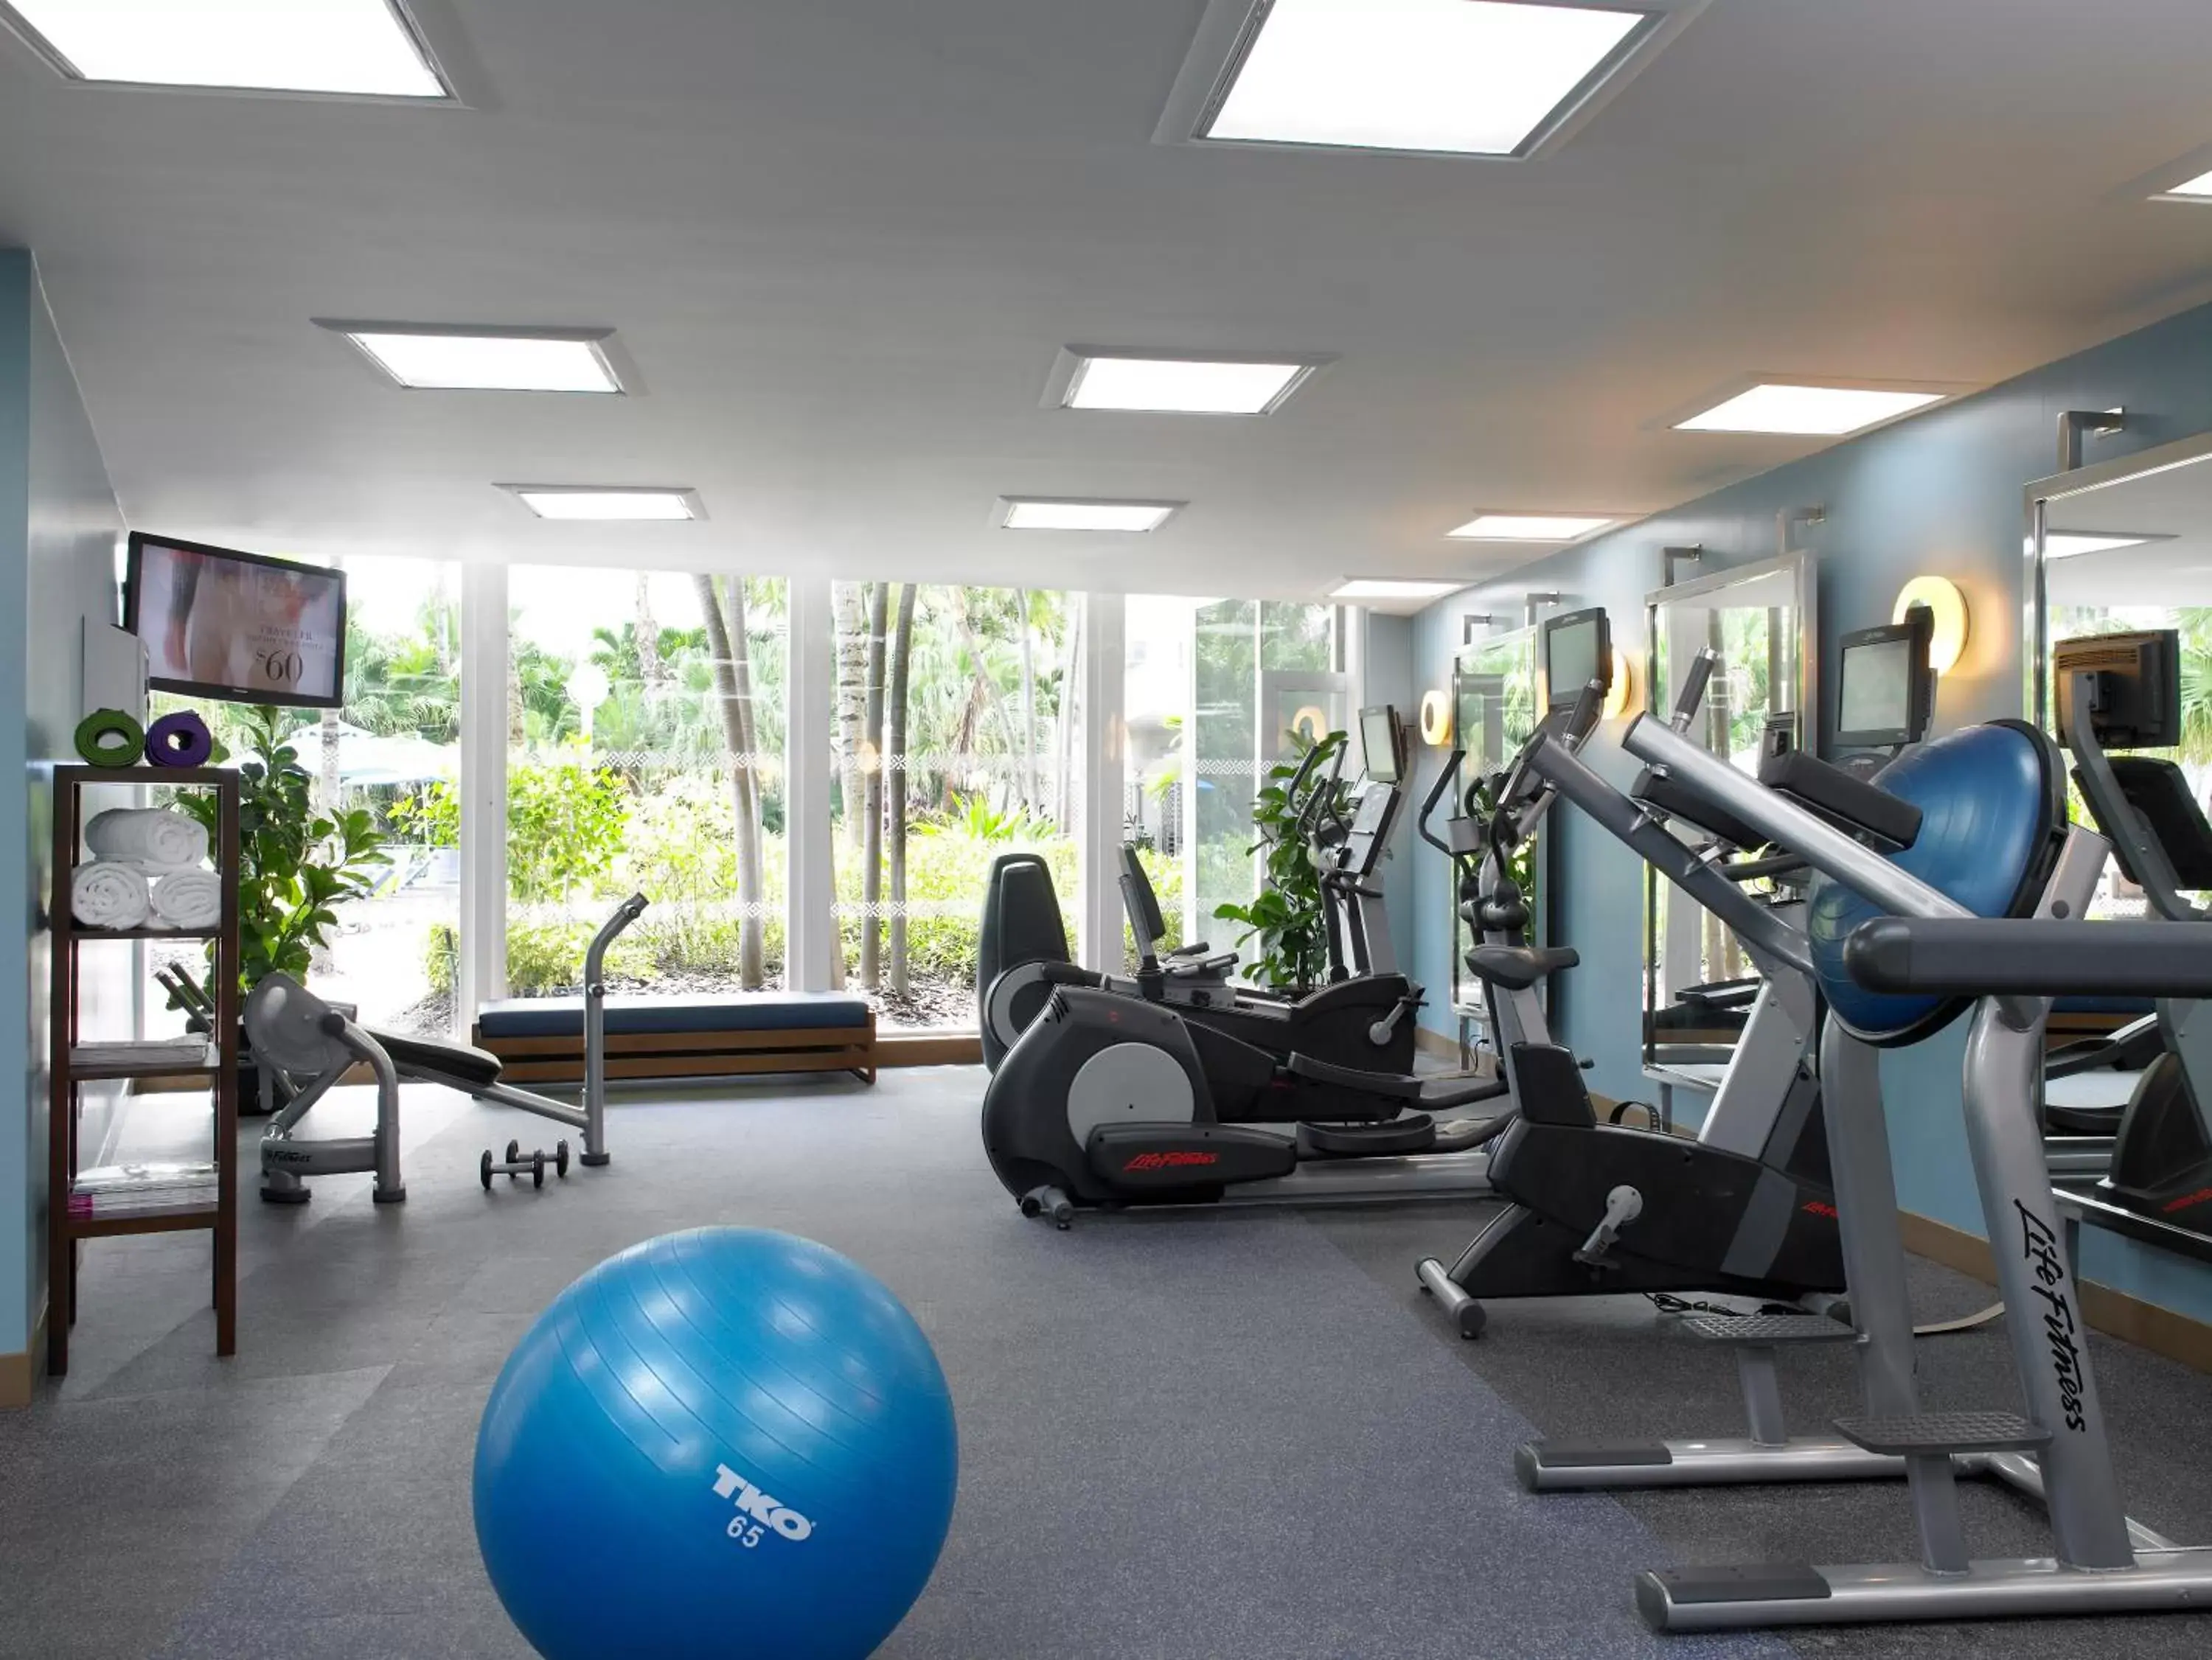 Fitness centre/facilities, Fitness Center/Facilities in Radisson Resort Miami Beach